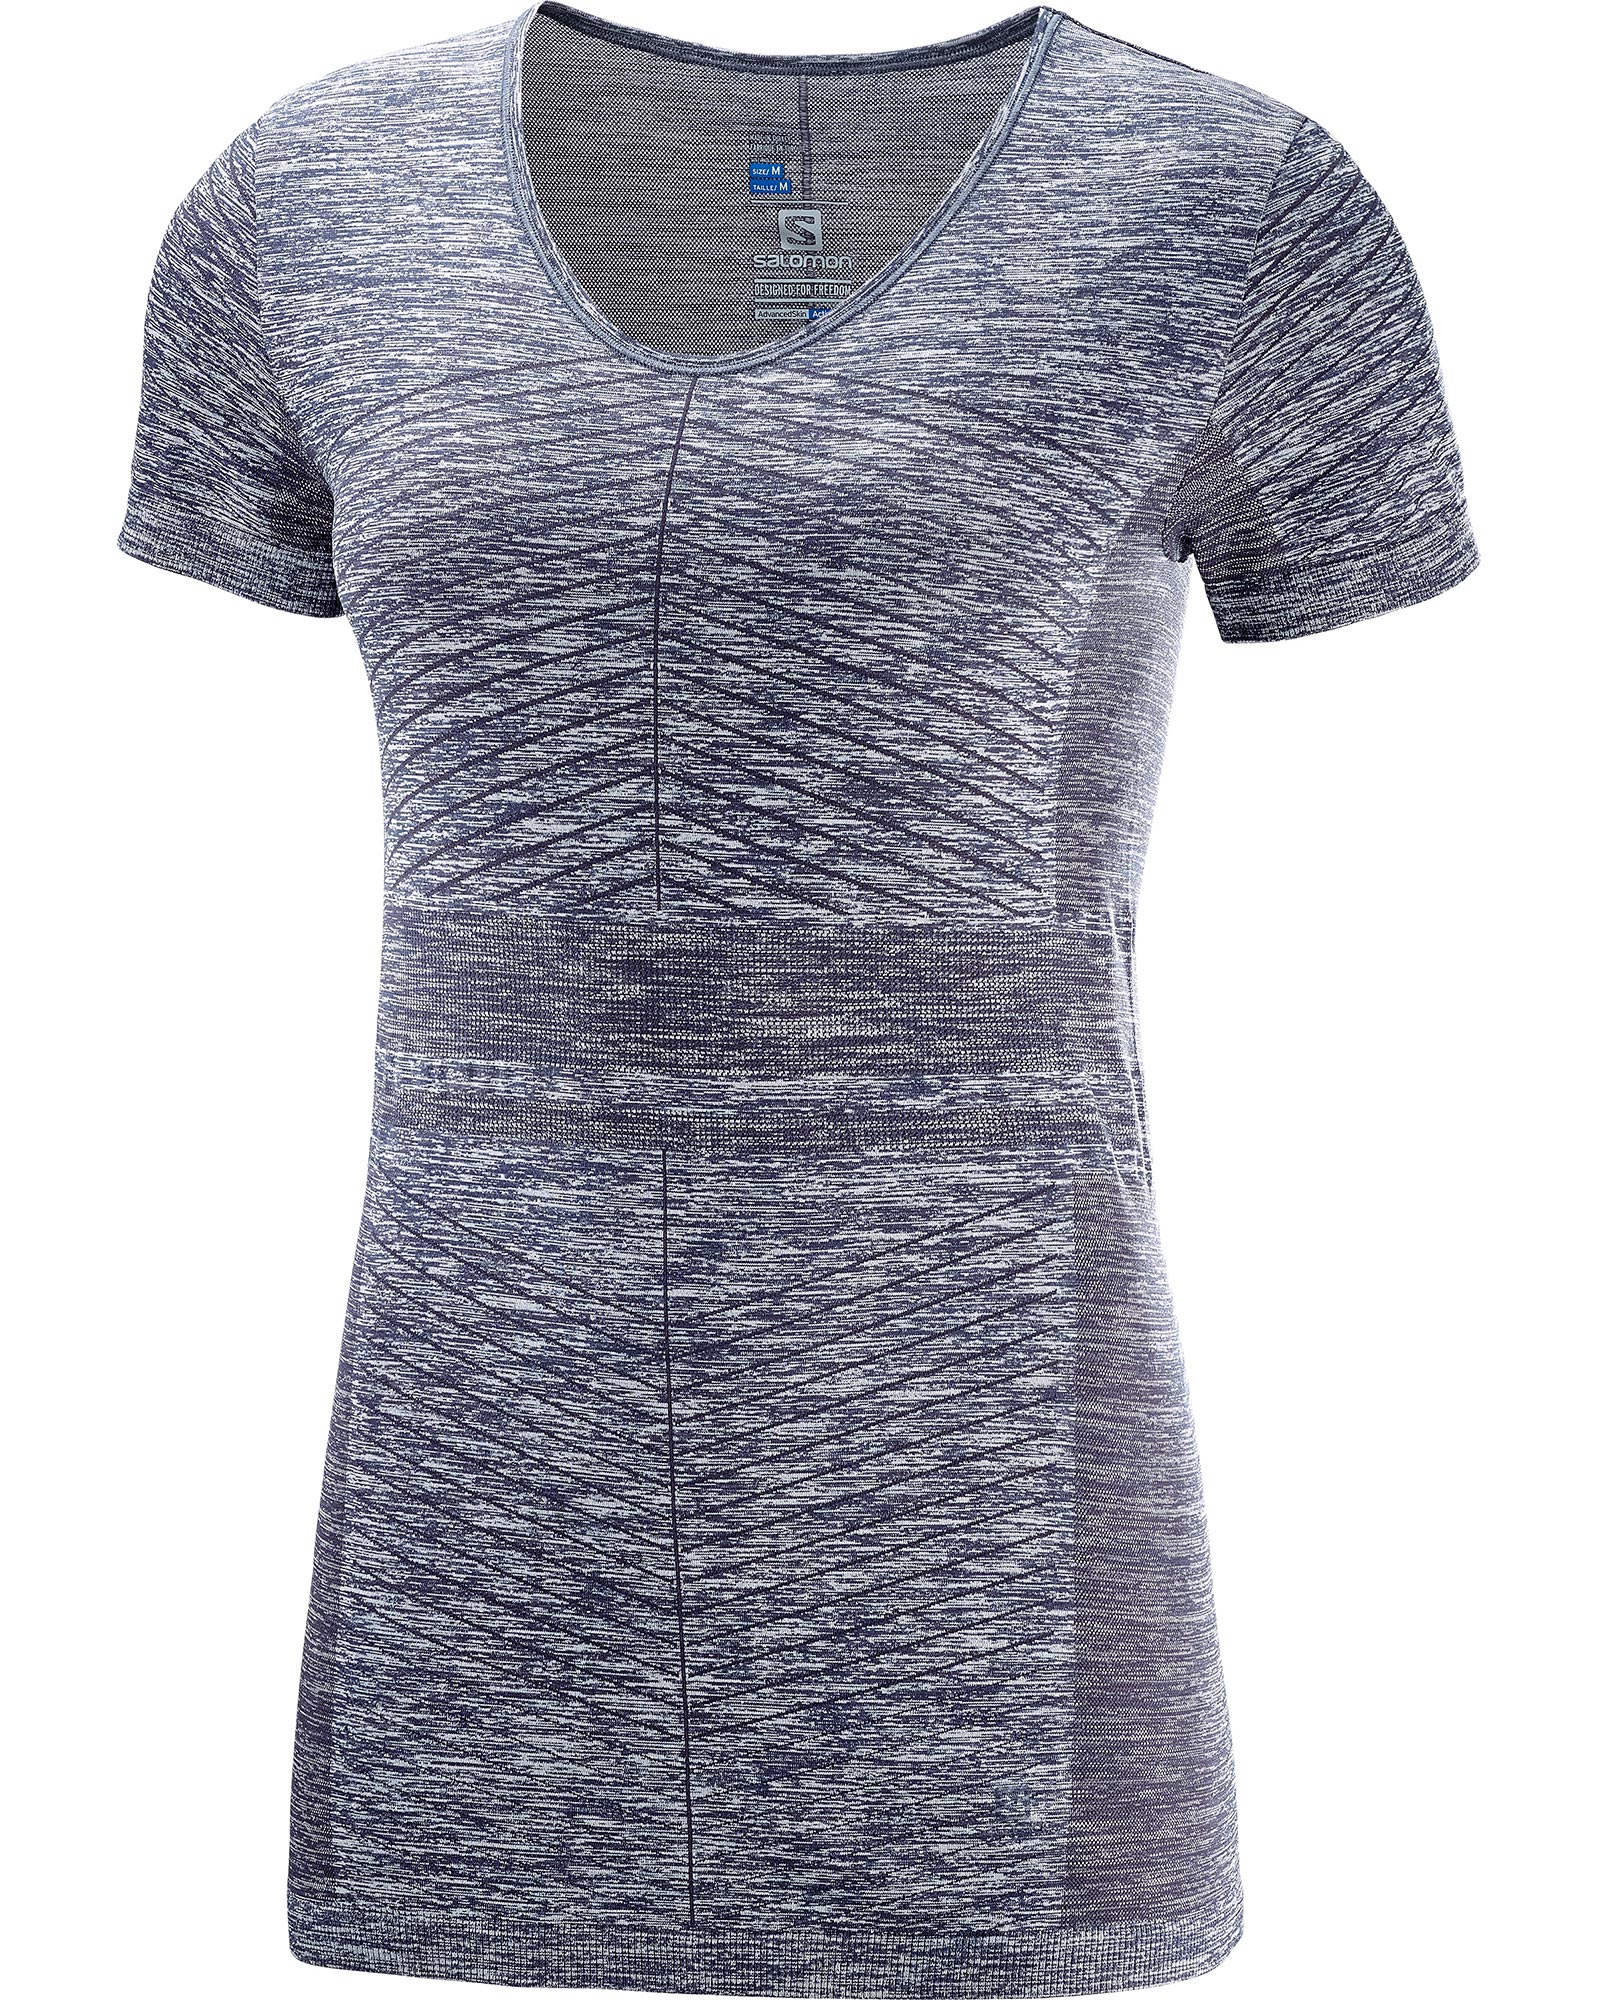 Salomon Elevate Move’On AdvancedSkin Women’s T Shirt - Graphite S